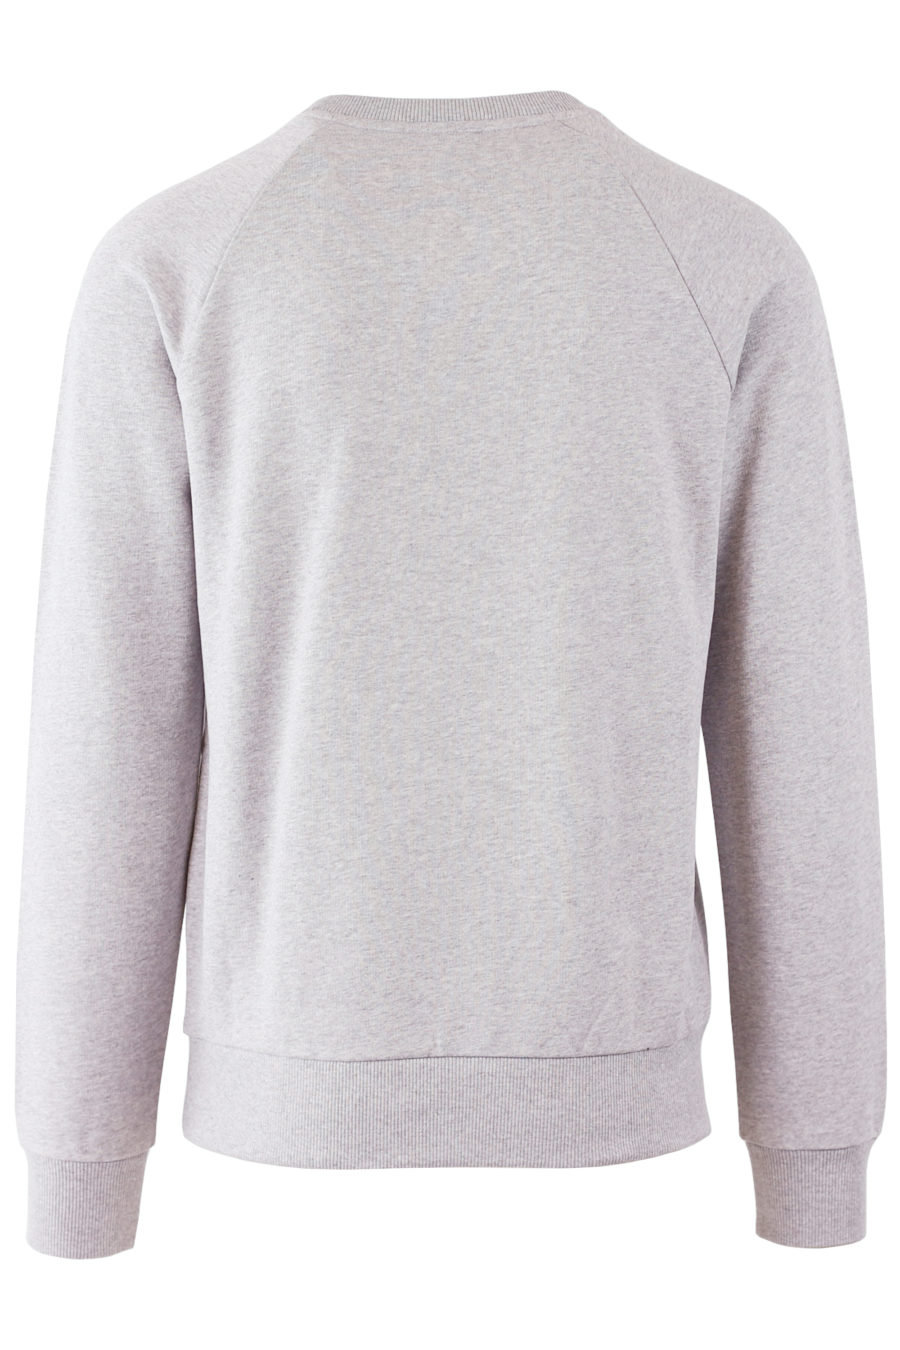 Grey sweatshirt with turquoise velvet logo - IMG 7792 copy